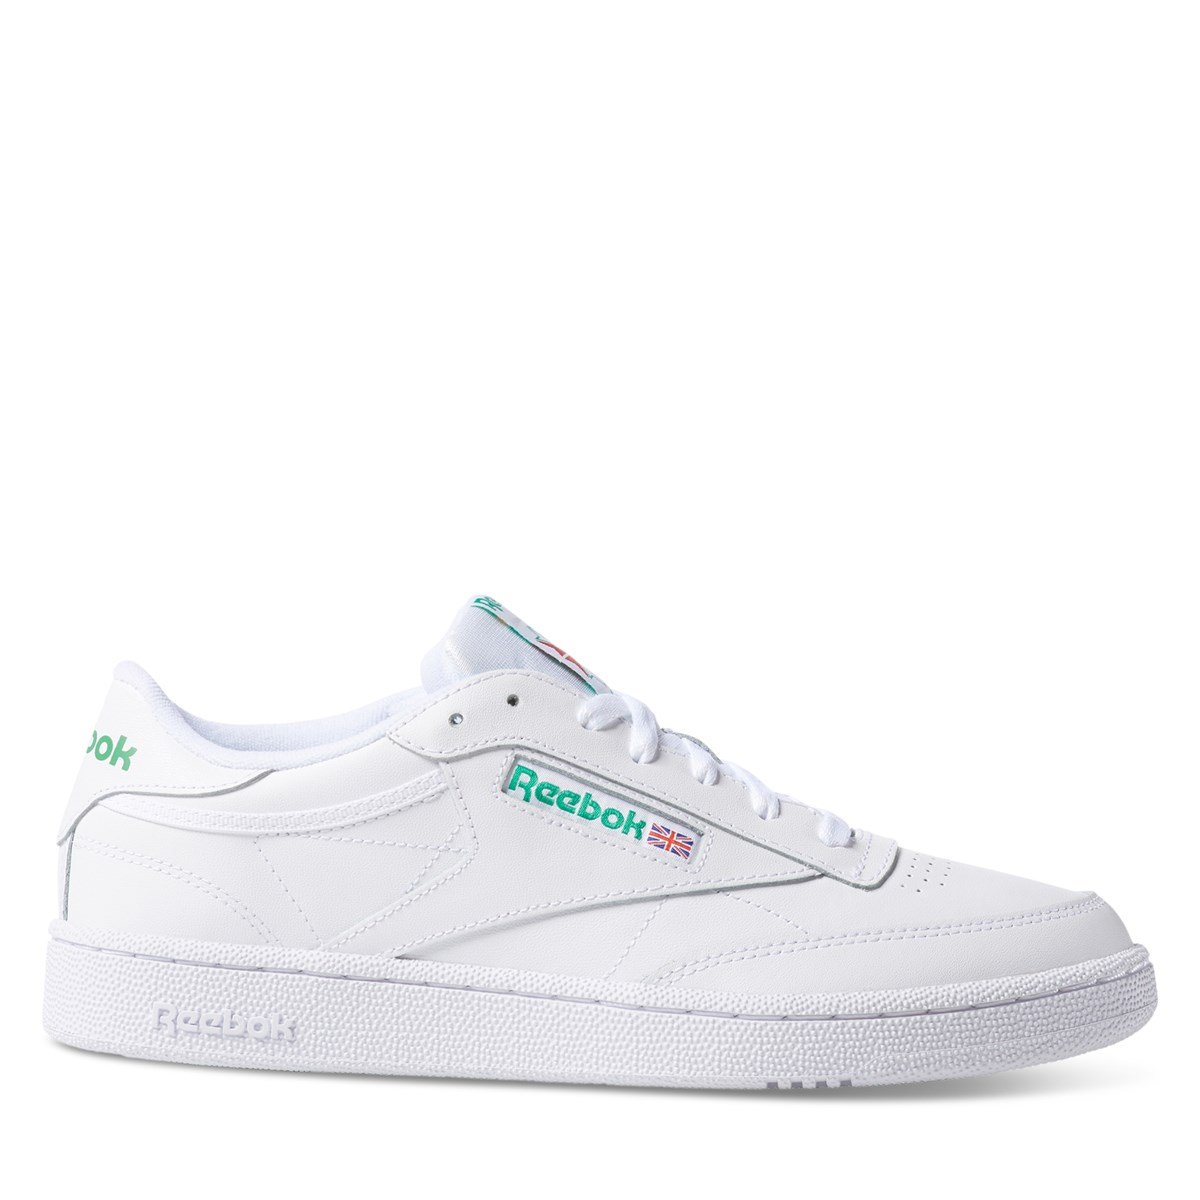 Men's Club C 85 Sneakers in White/Green 